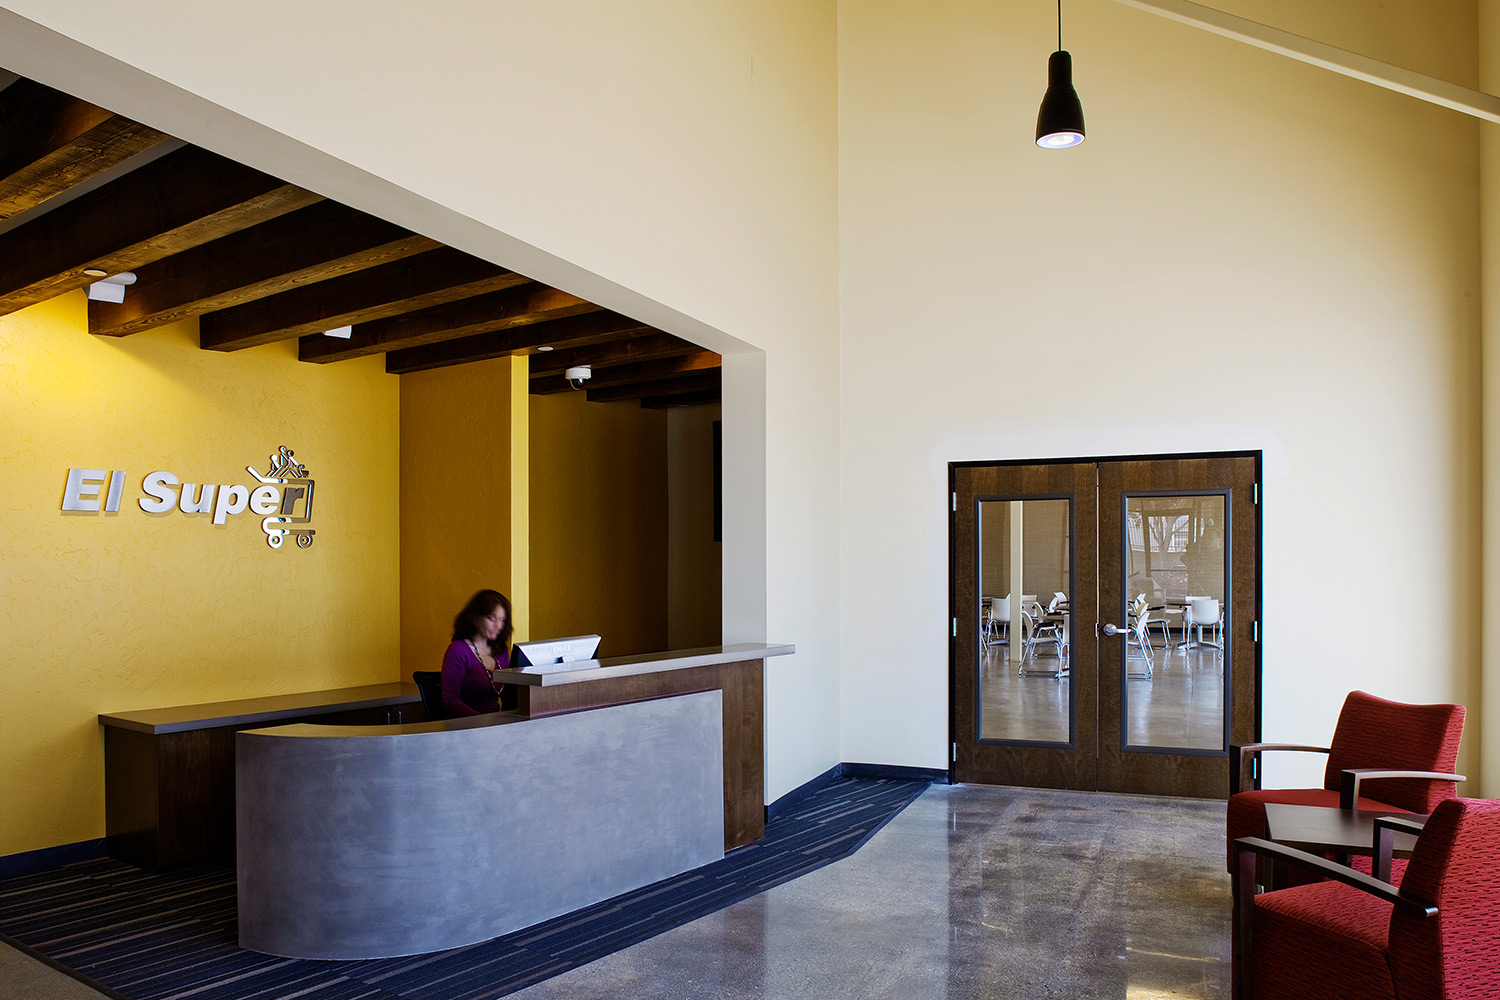 El Super Corporate Office Paramount, CA – AGI General Contracting